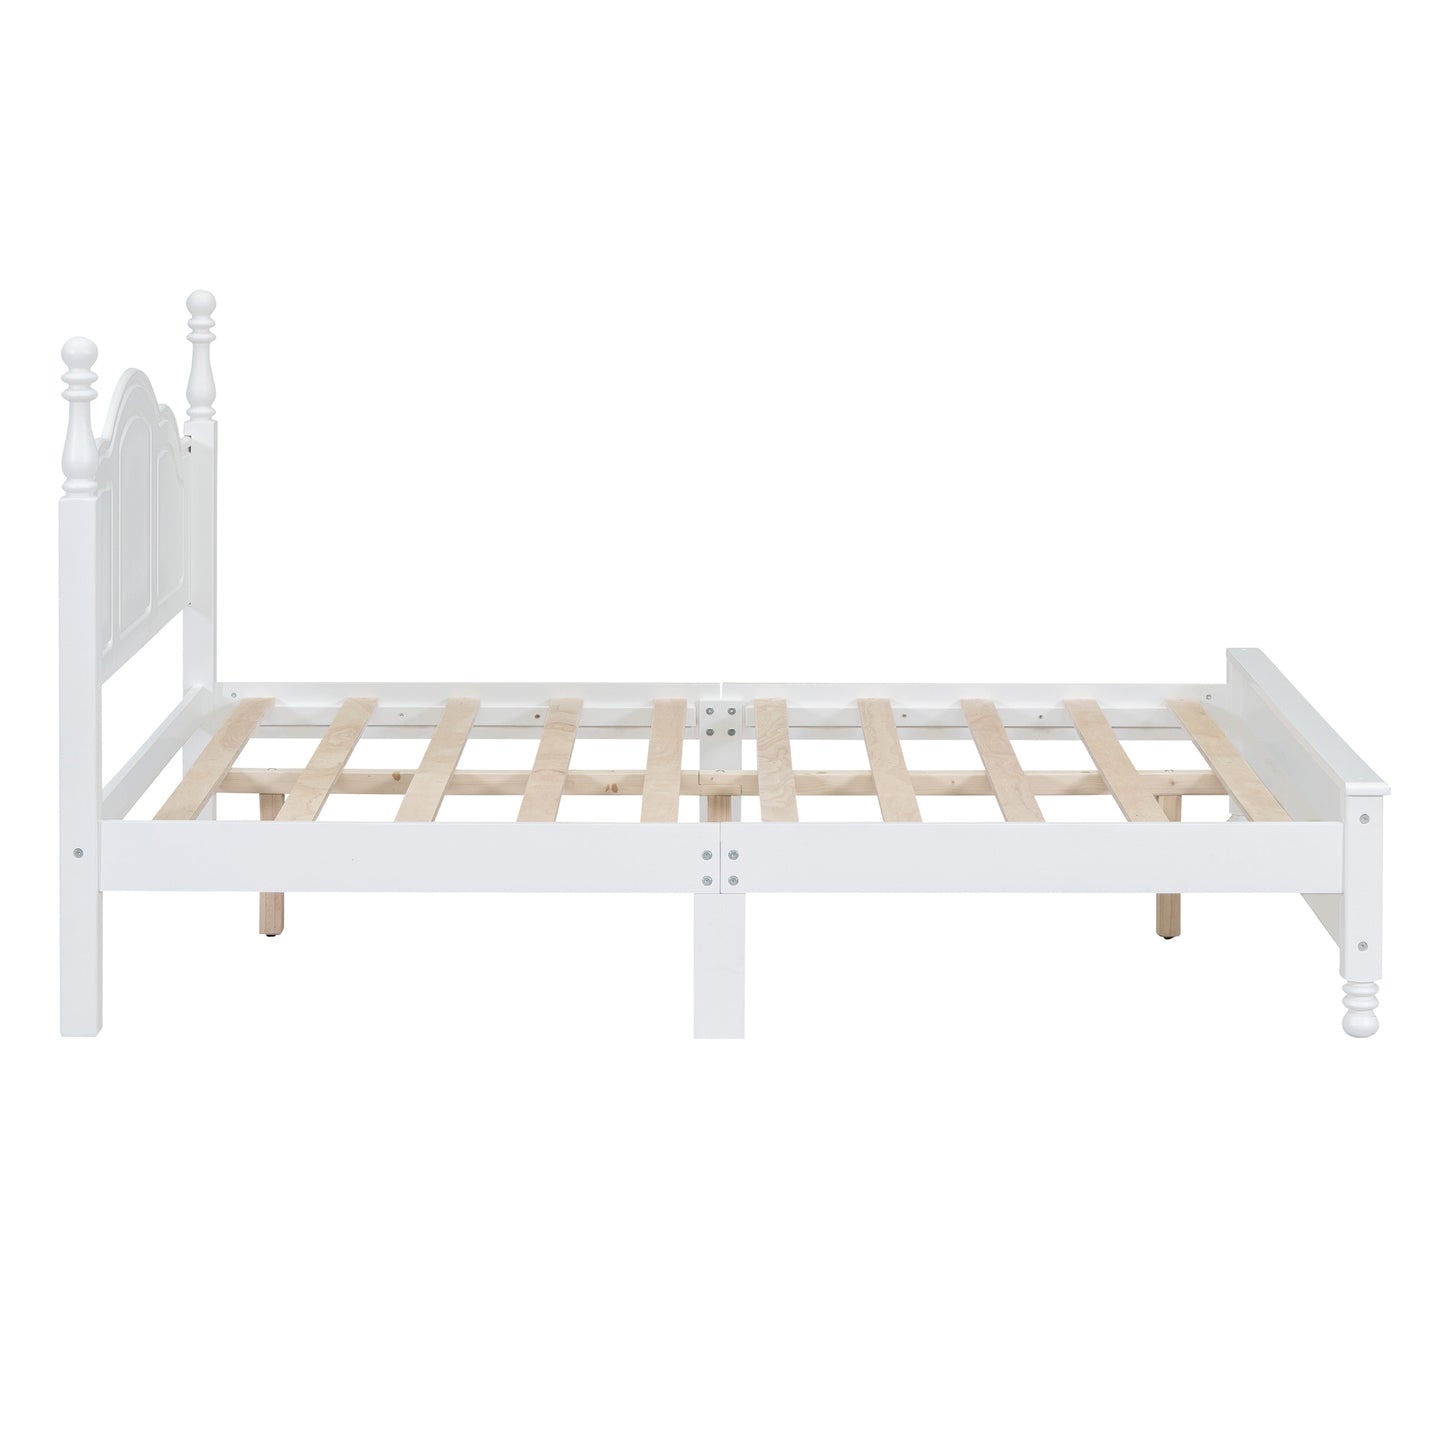 Full Size Wood Platform Bed Frame,Retro Style Platform Bed with Wooden Slat Support,White